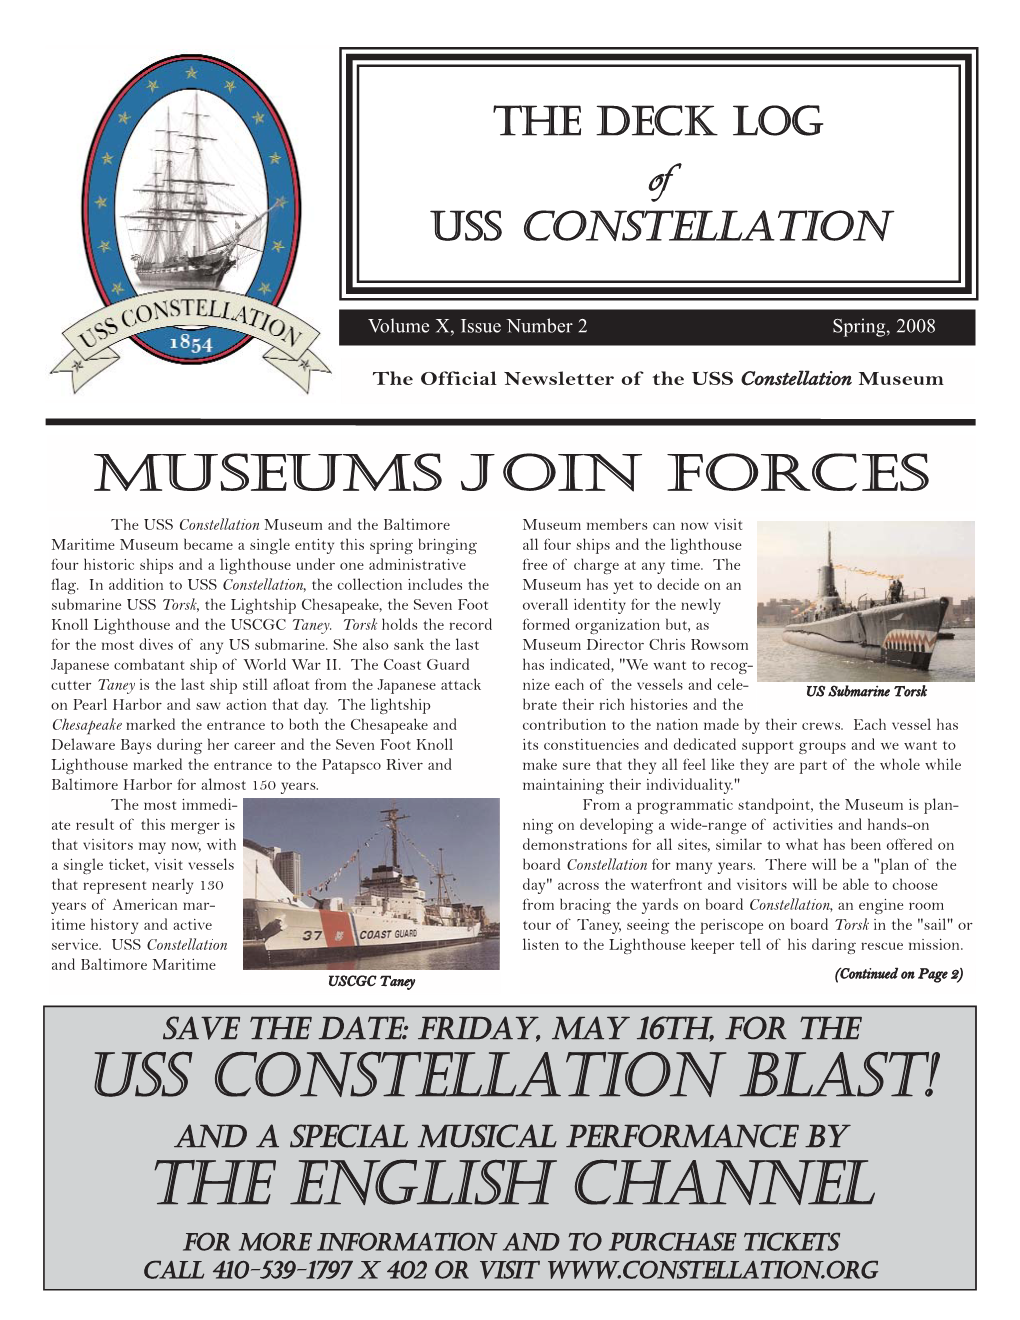 The Deck Log of USS Constellation